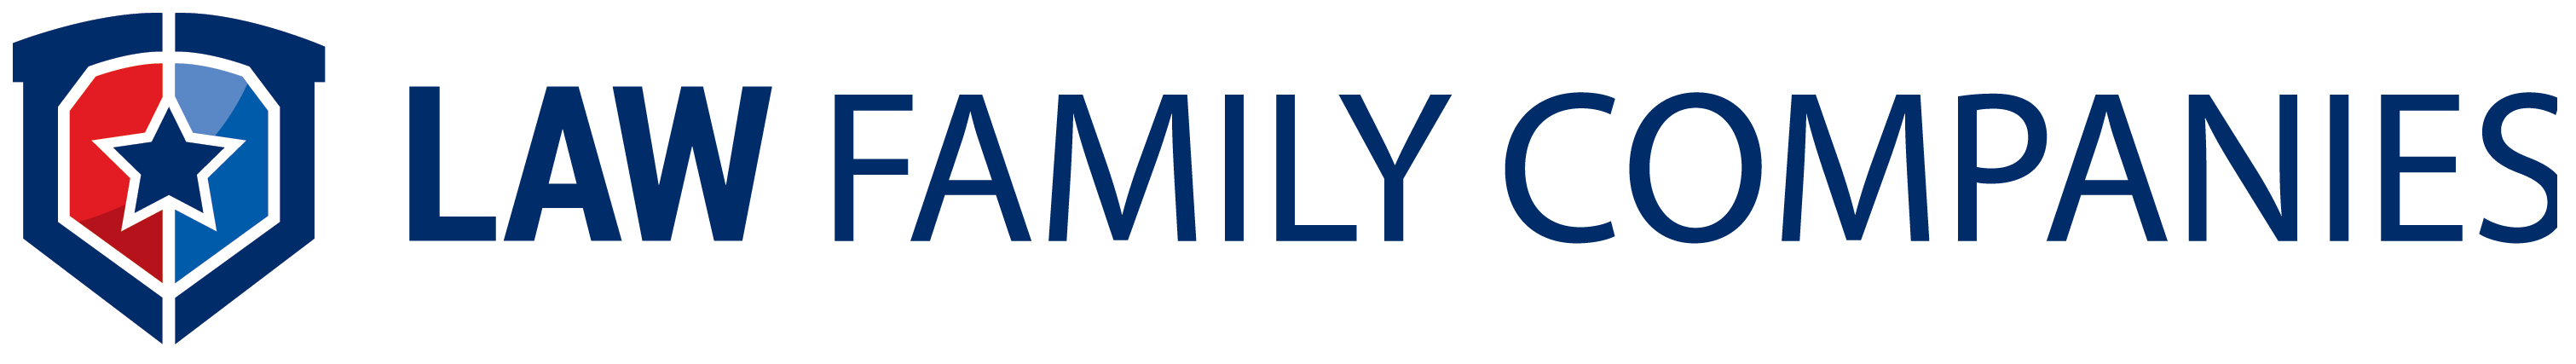 Law Family Companies